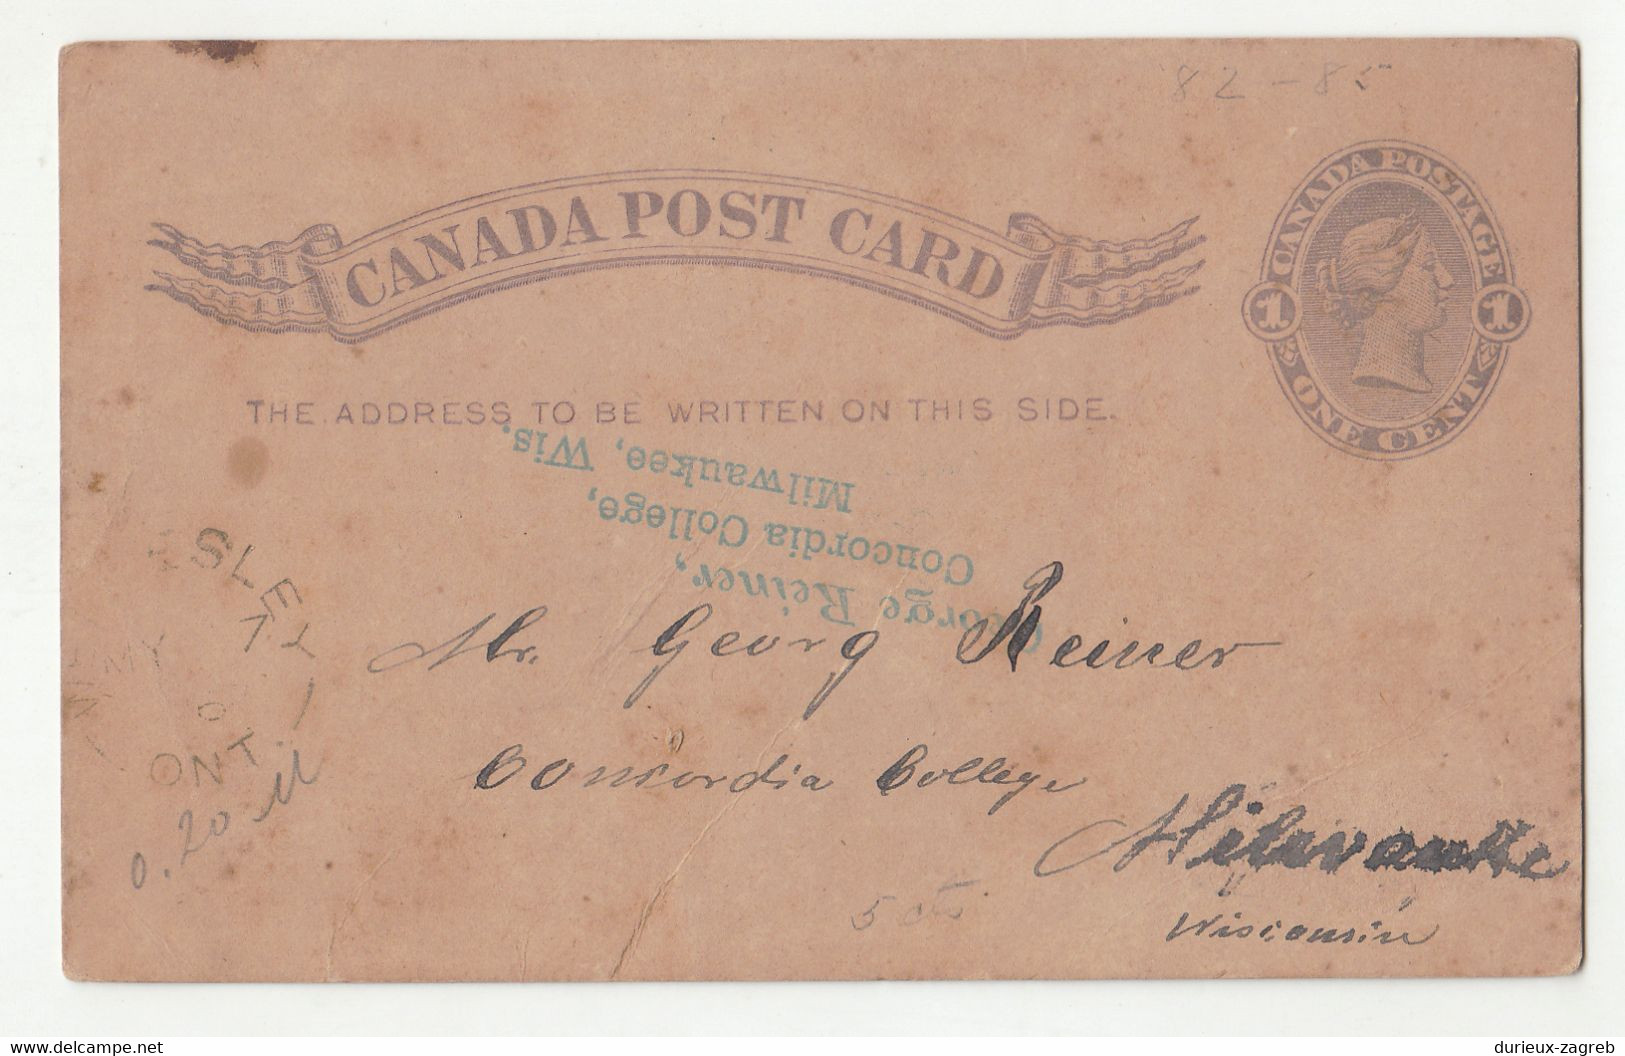 Canada QV Postal Stationery Postcard Posted? 1886 B221210 - 1860-1899 Regering Van Victoria